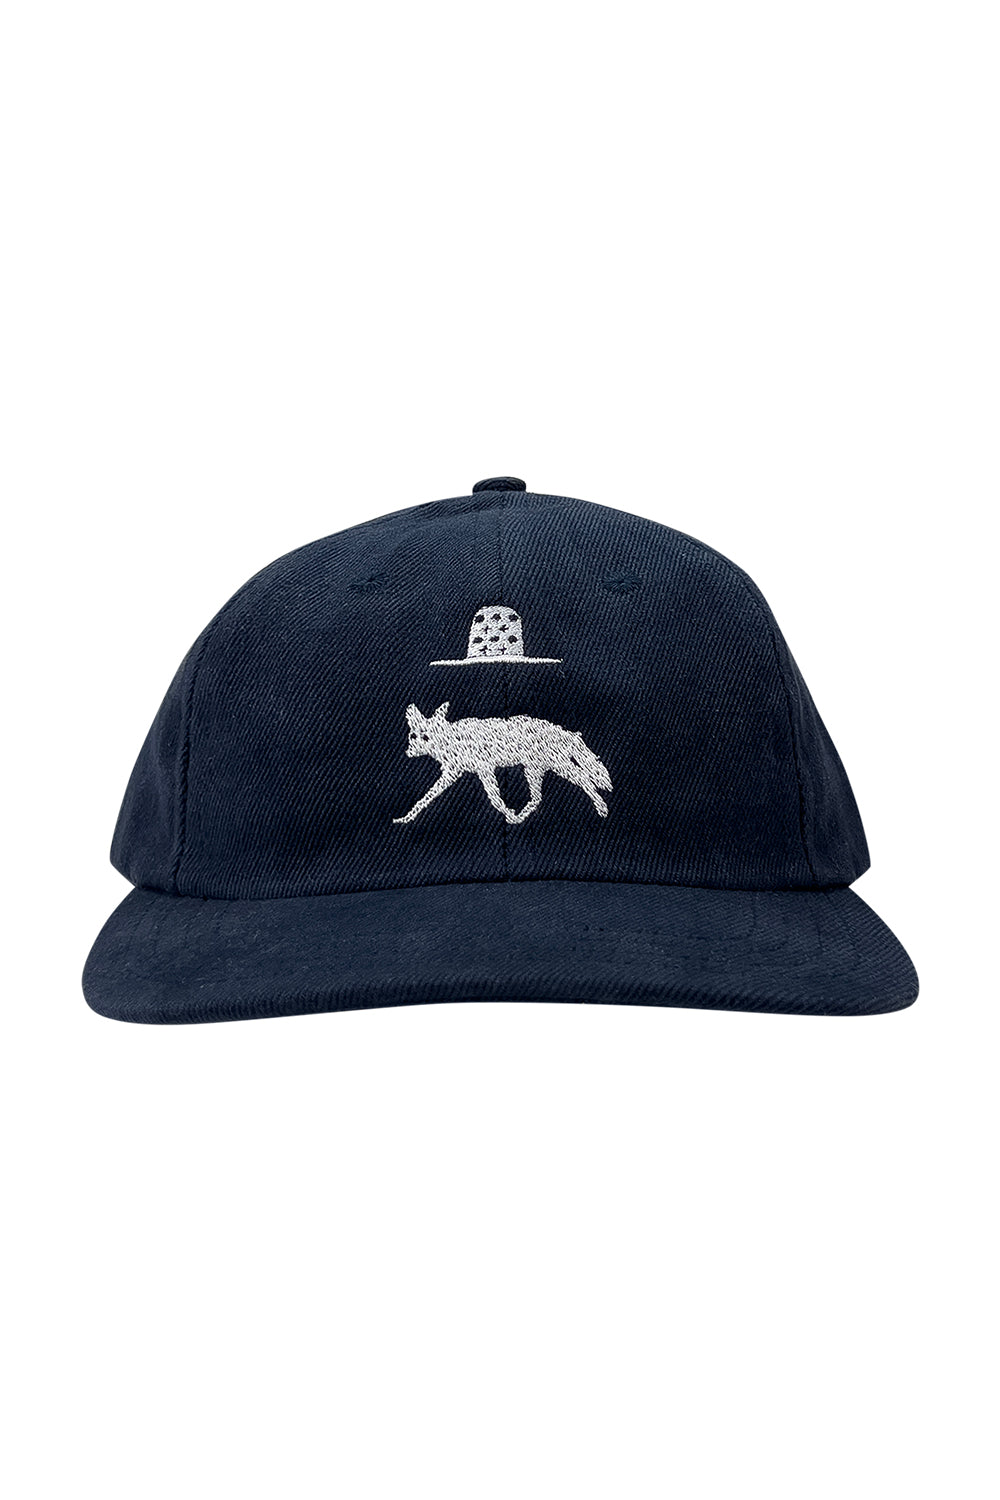 Coyote Twill Cap | Jungmaven Hemp Clothing & Accessories / Color: Navy